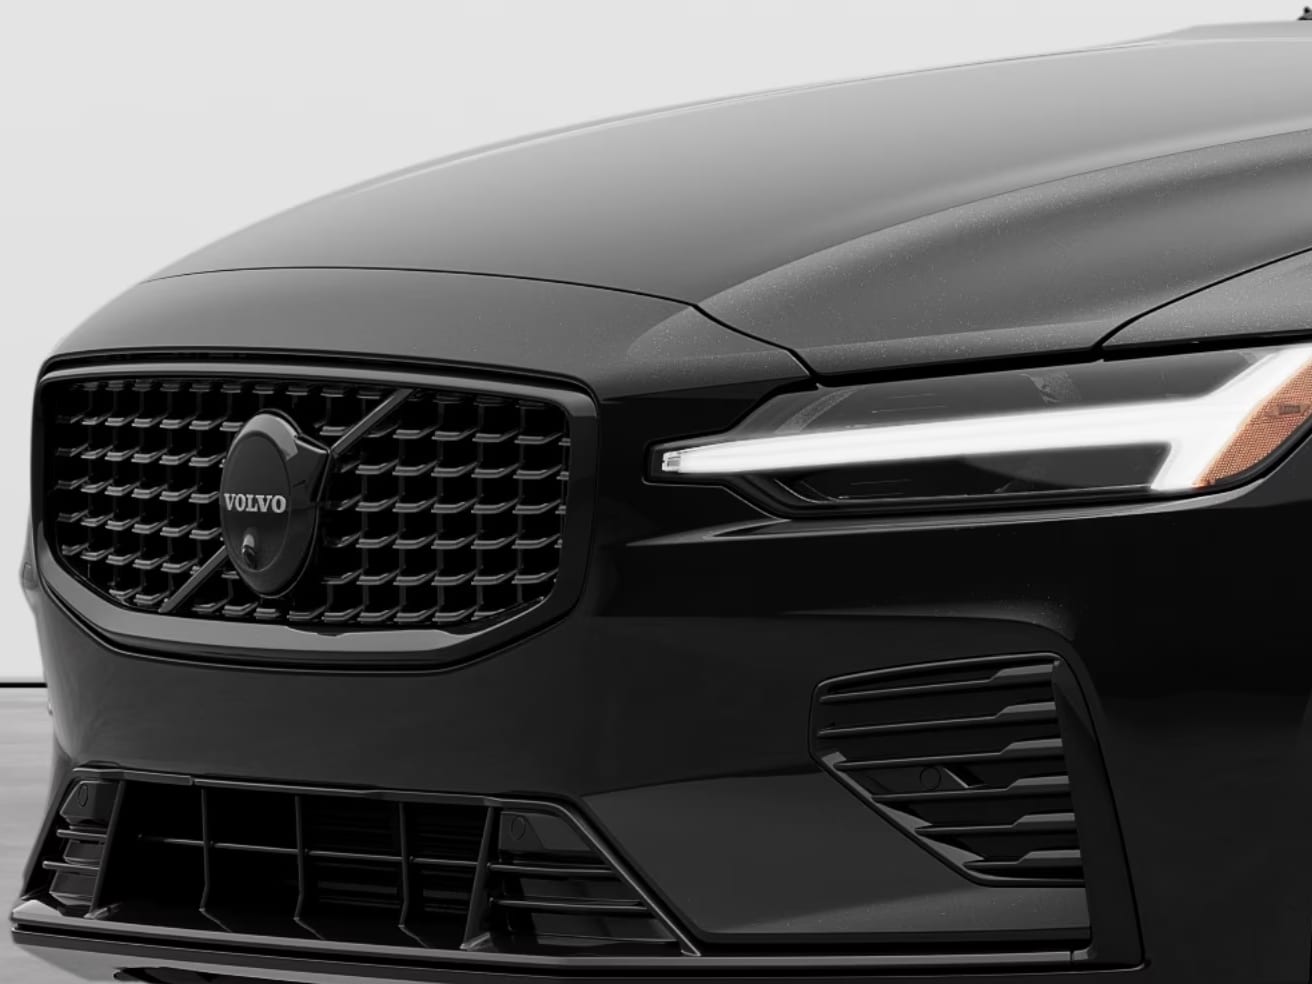 Sleek Volvo Black Edition Detailing - Front of Black Volvo Grille